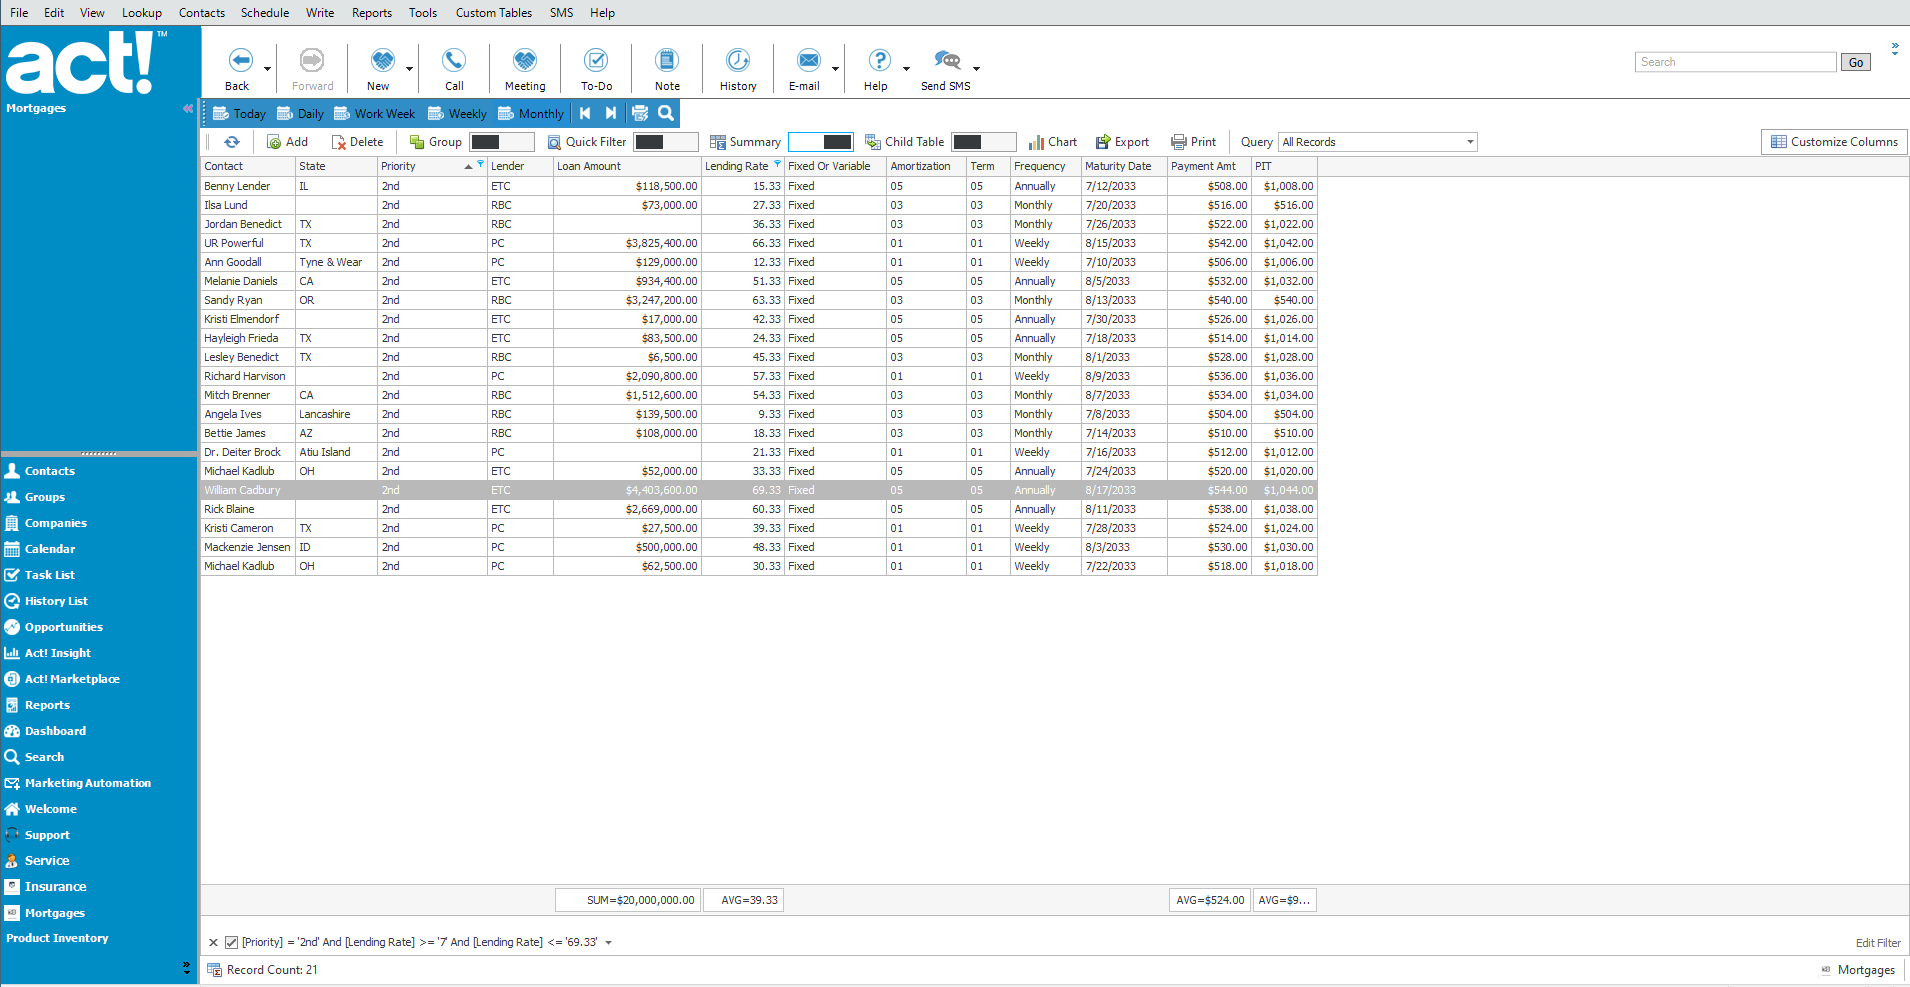 screen shot showing spreadsheet functionality